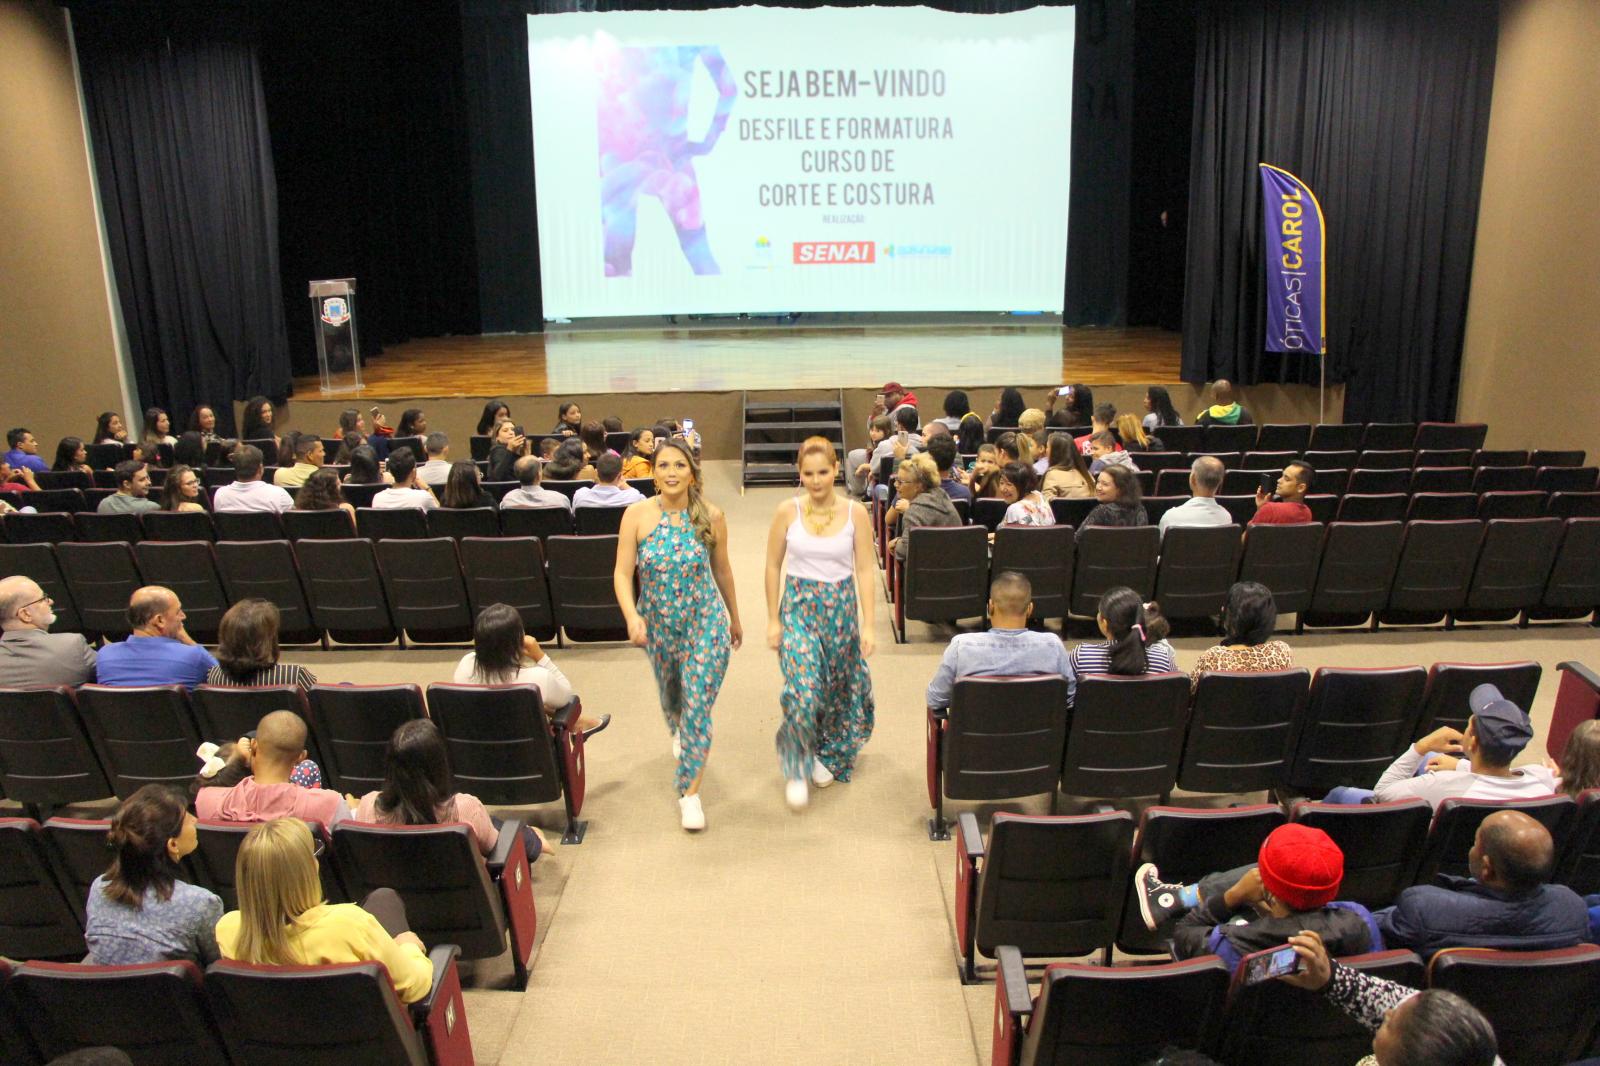 FSS de Morungaba promove Desfile de Moda no Teatro Municipal Fioravante Frare